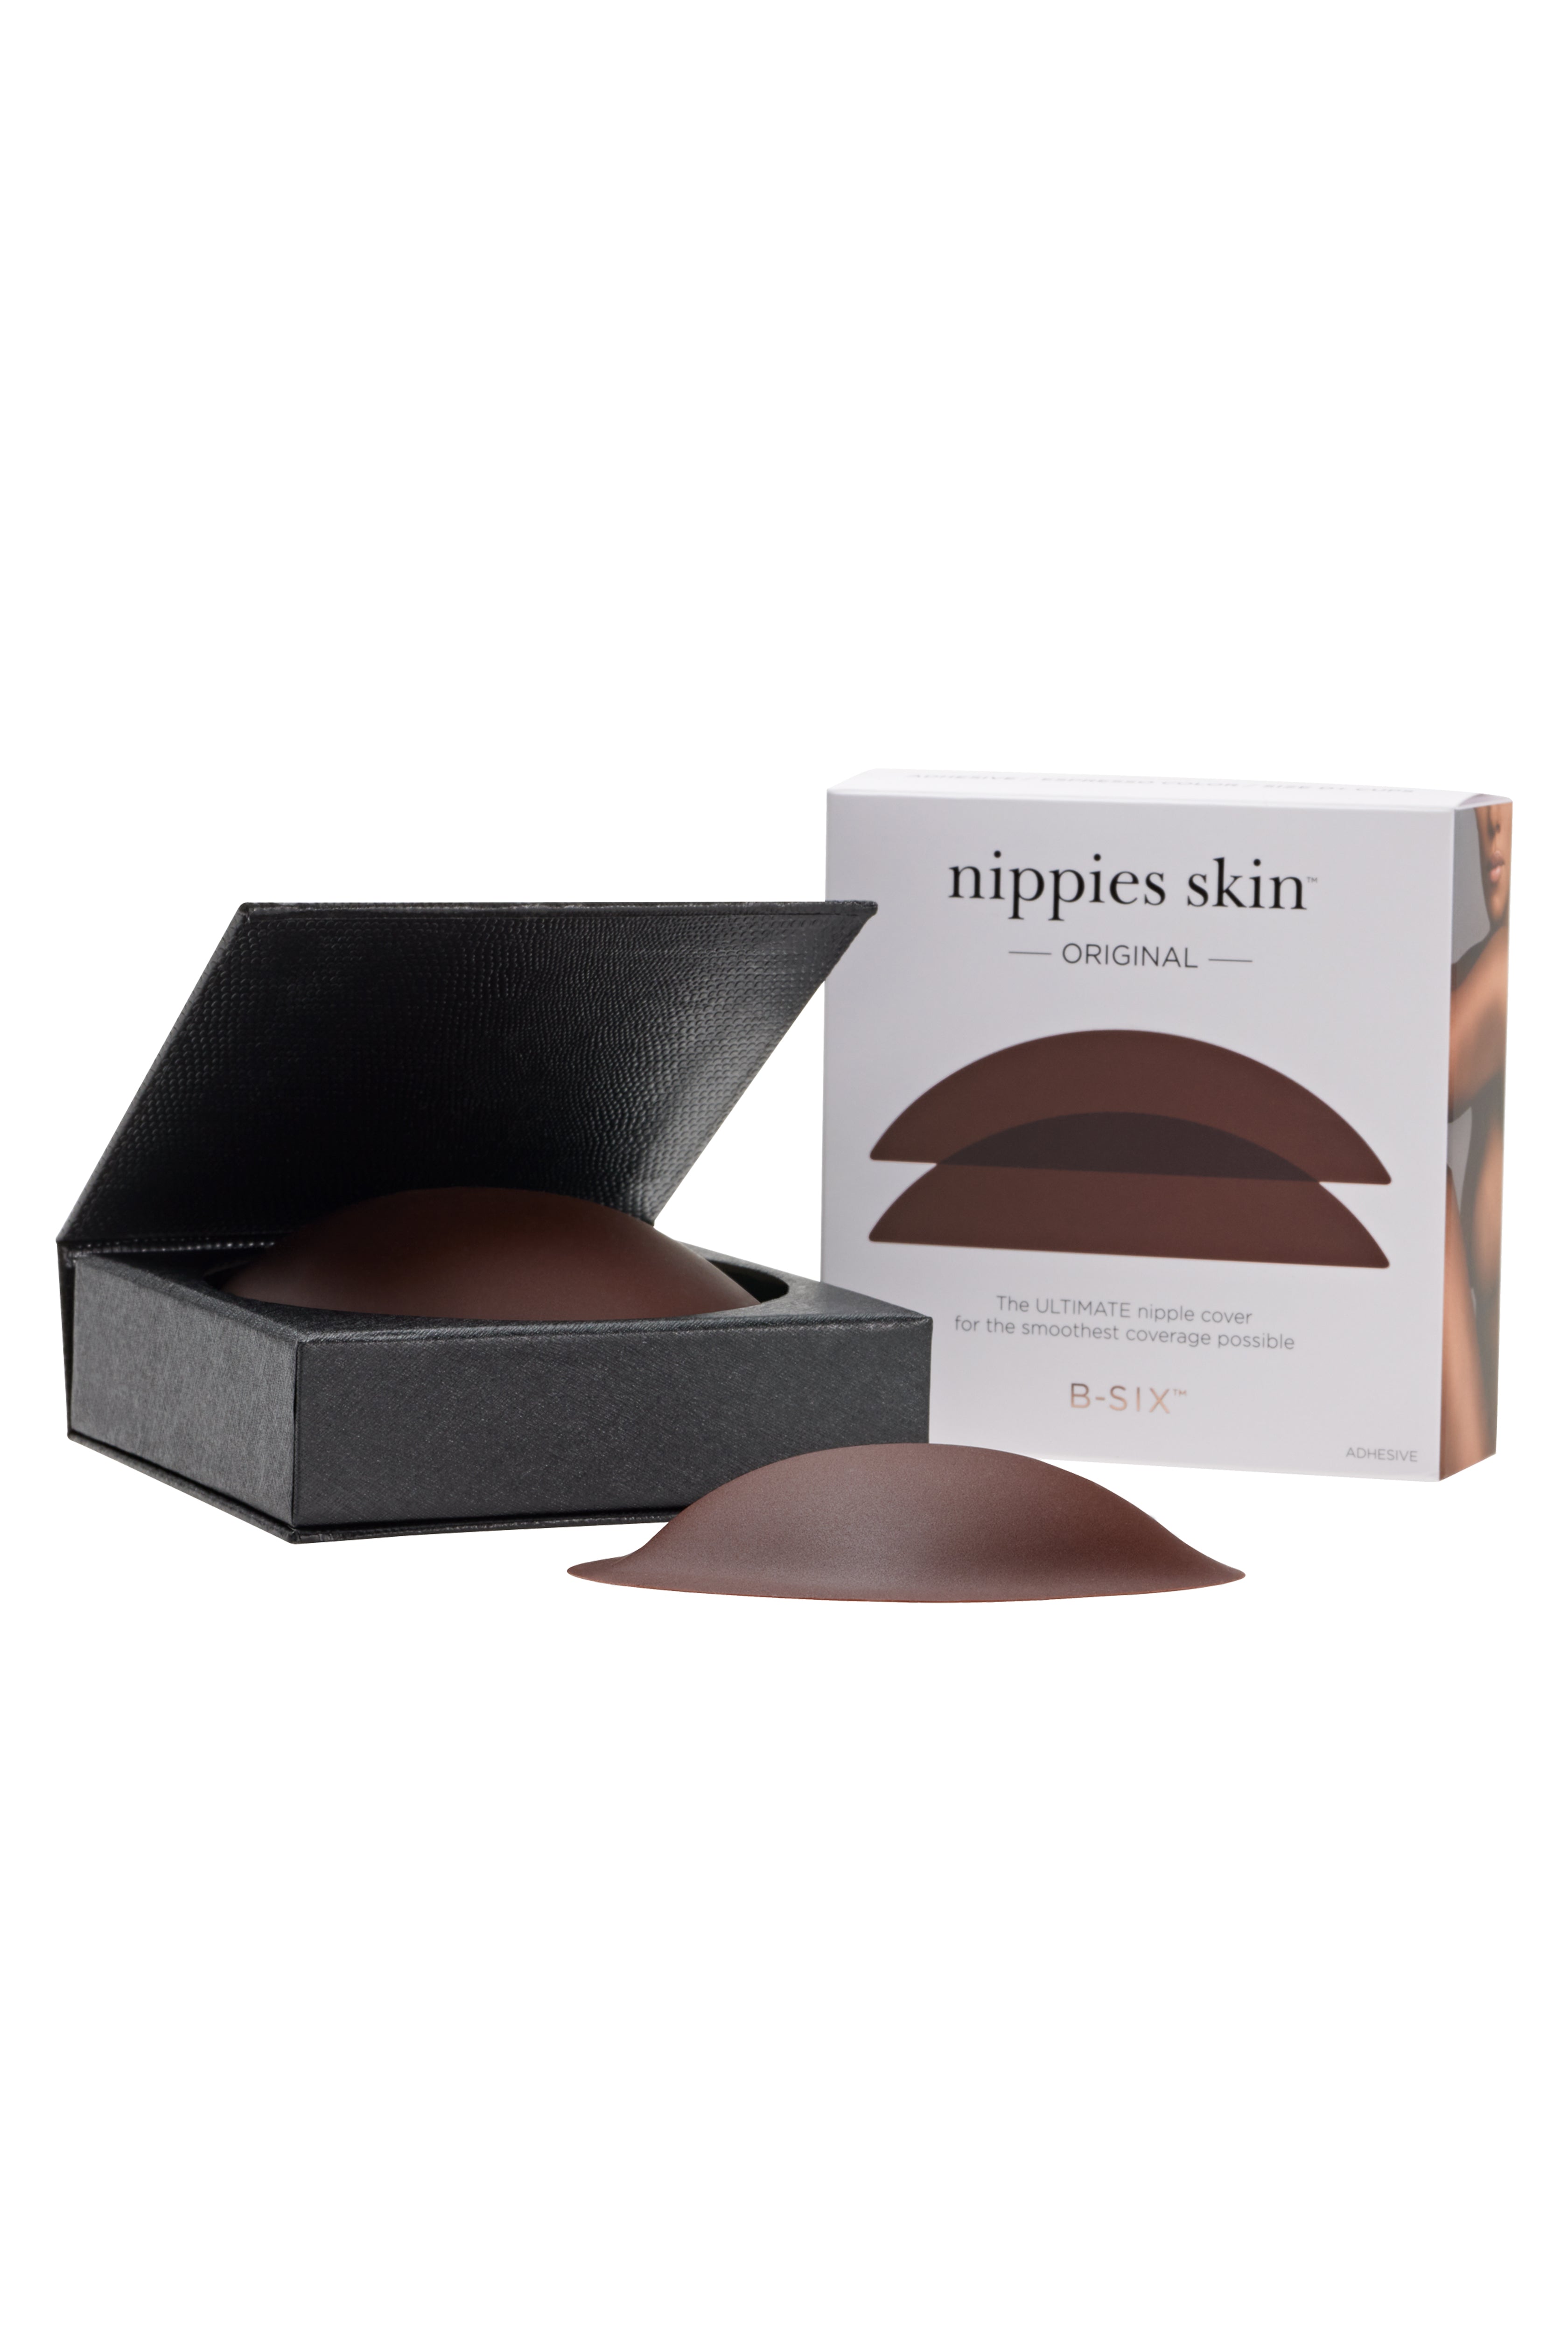 Adhesive Nippies Skin Covers